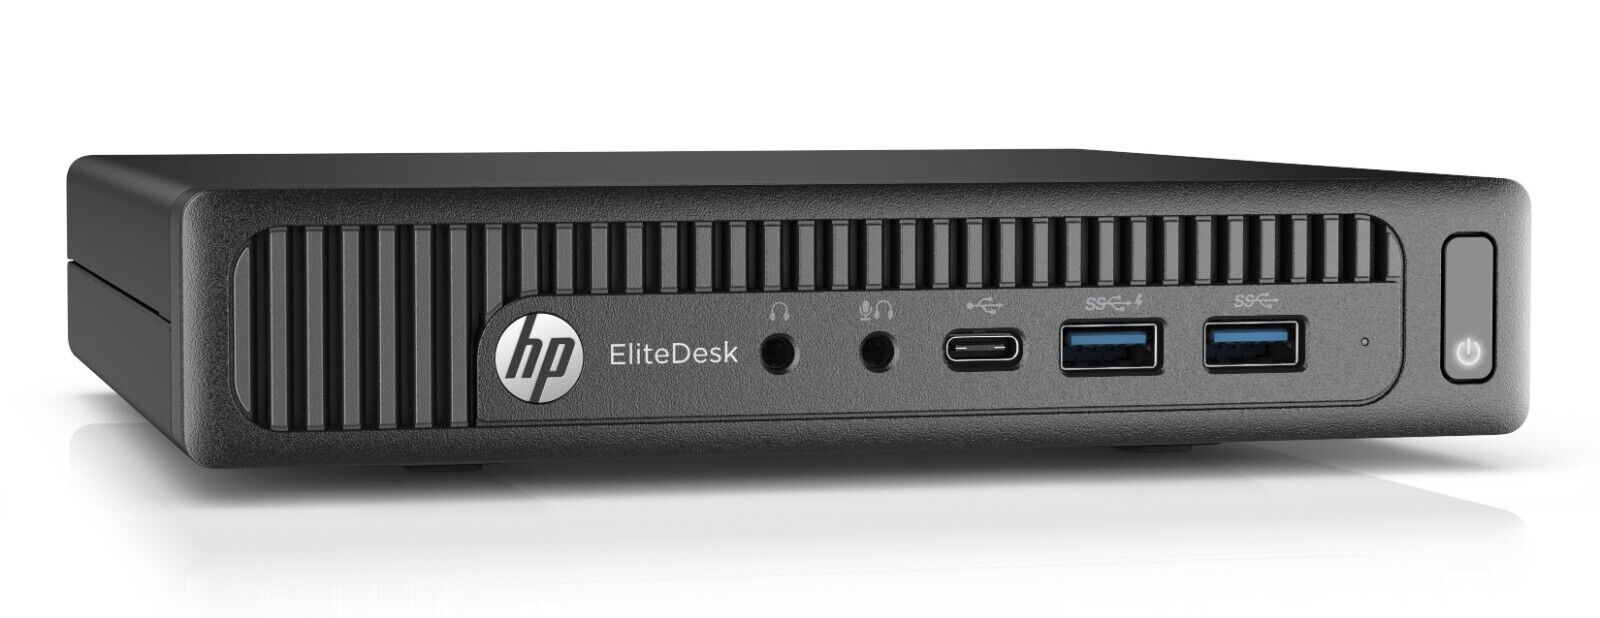 HP EliteDesk 800 G2 Mini Desktop Intel 2.9GHz 8GB RAM 500GB HDD Win10